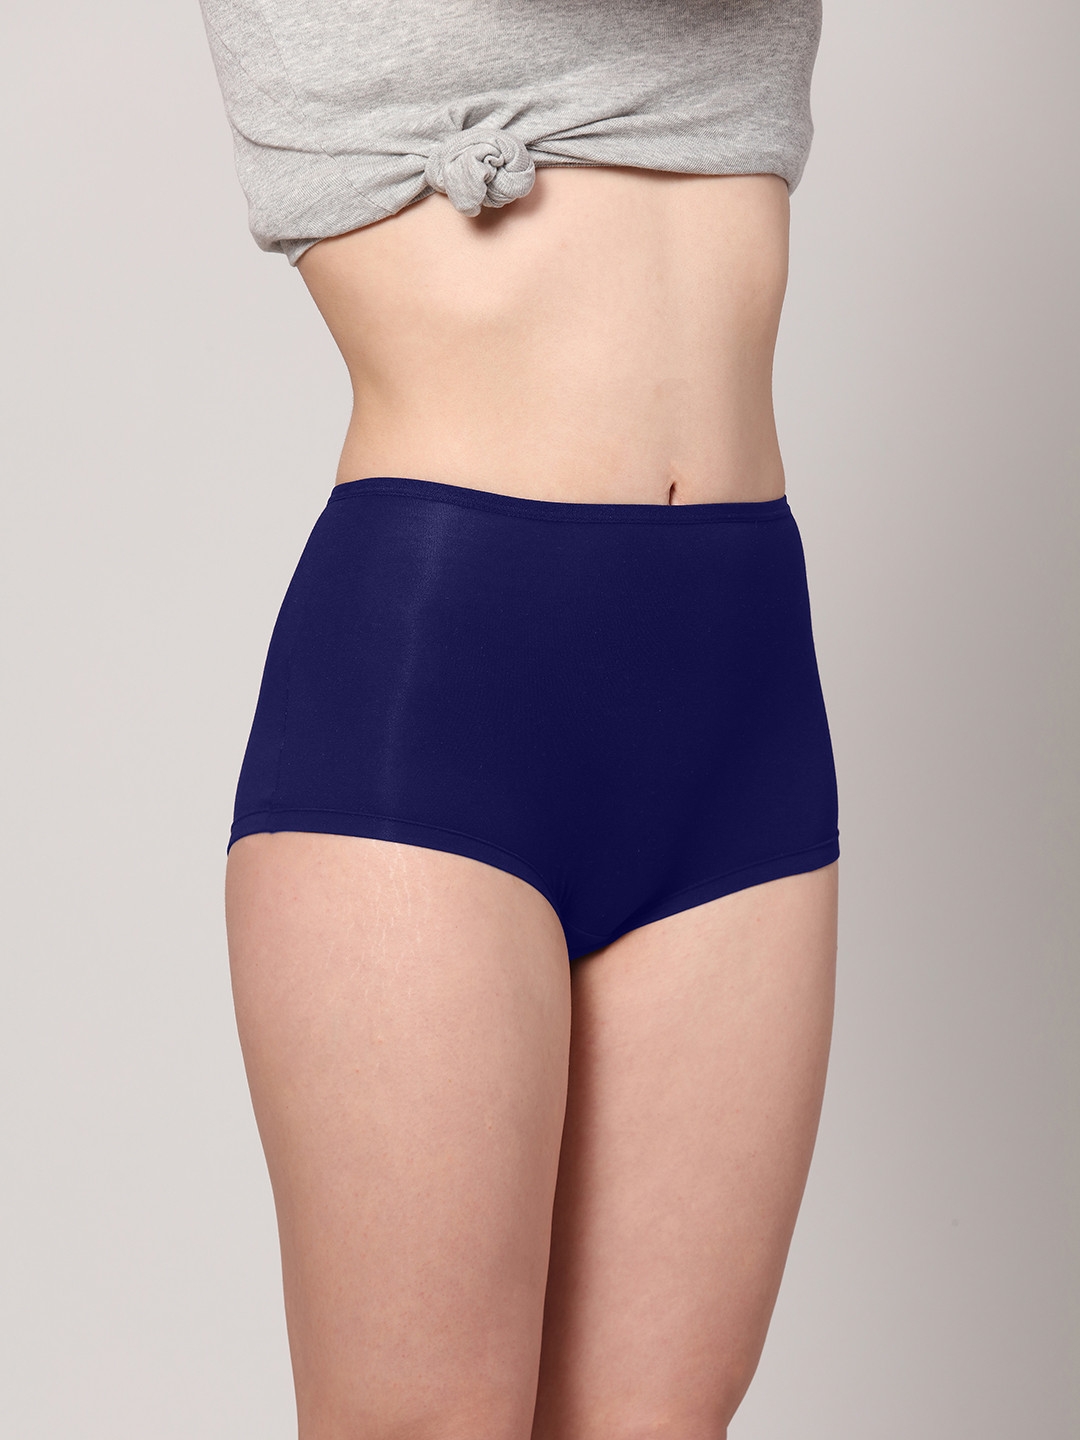 AshleyandAlvis | AshleyandAlvis Women's Panties Micro Modal, Anti Bacterial, Skinny Soft, Premium Boys Leg  -No Itching, Sweat Proof, Double In-seam Gusset 2